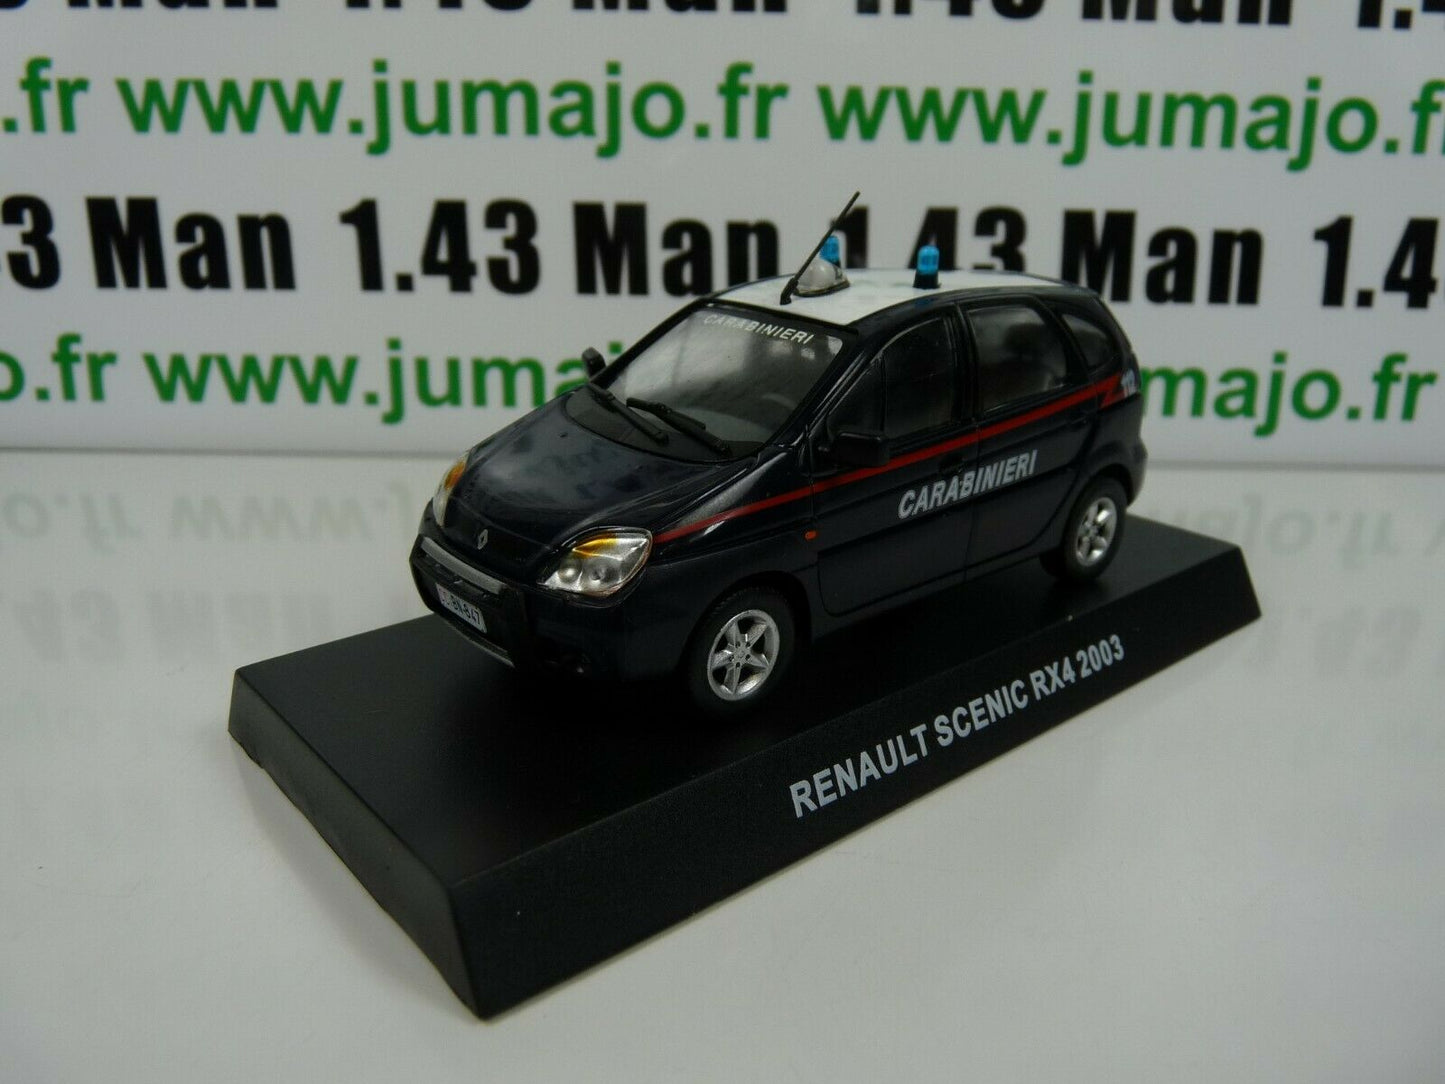 CR1 voiture 1/43 CARABINIERI : RENAULT SCENIC RX4 2003